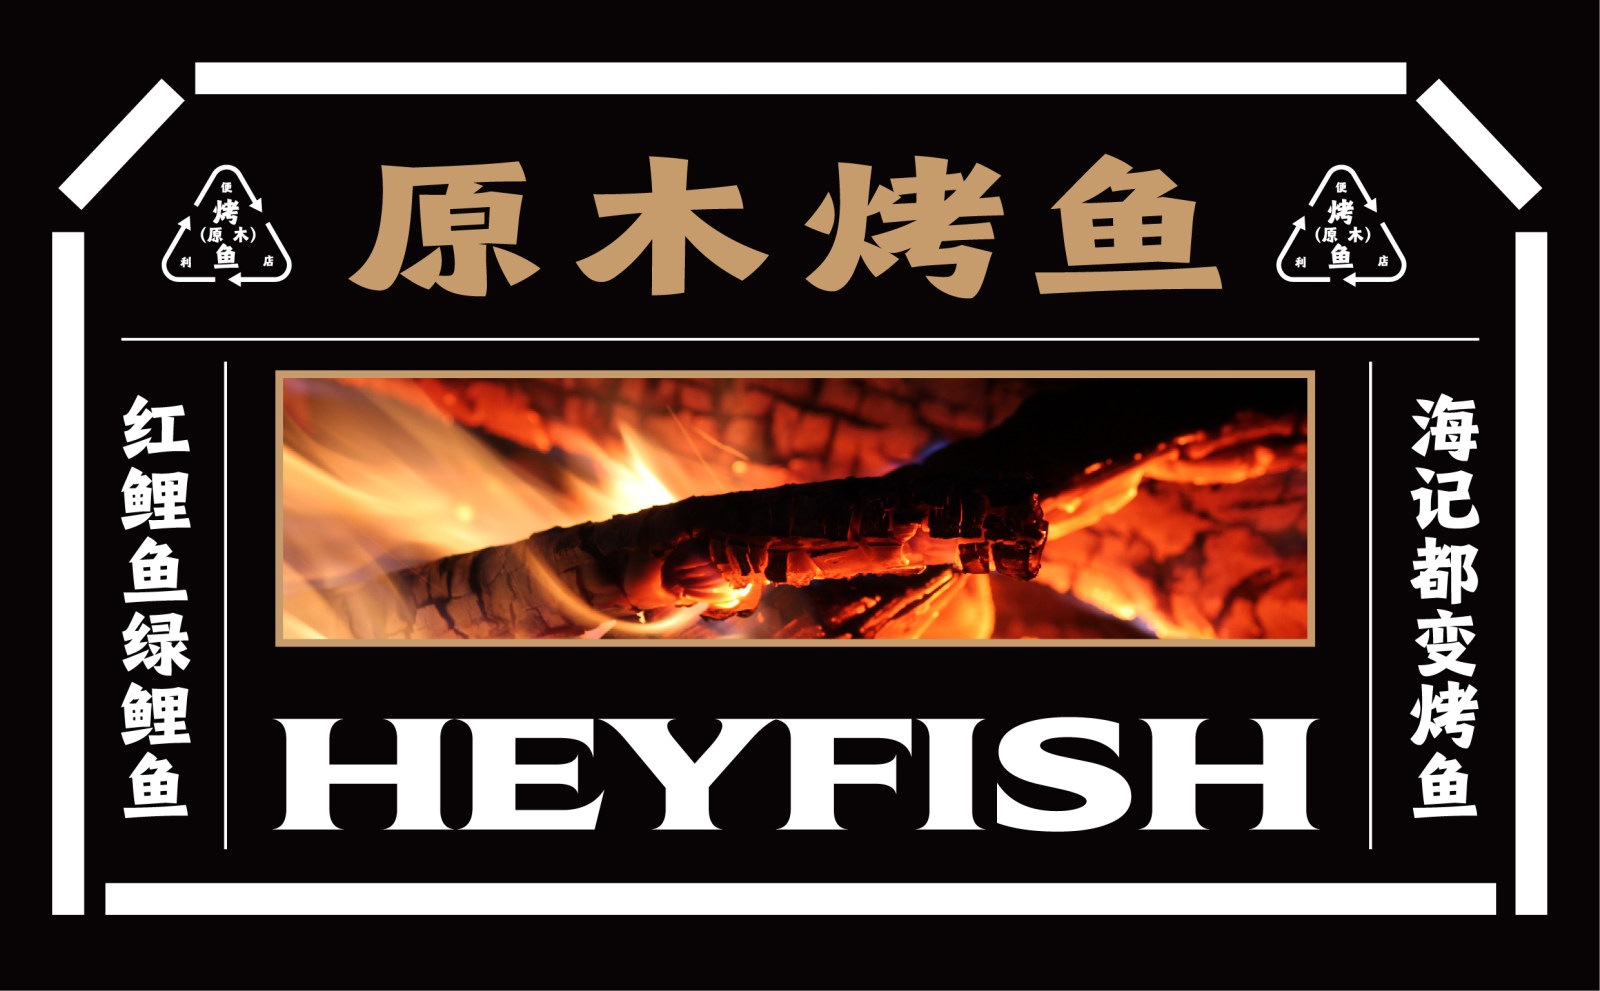 HEYFISH·海记 原木烤鱼新标杆